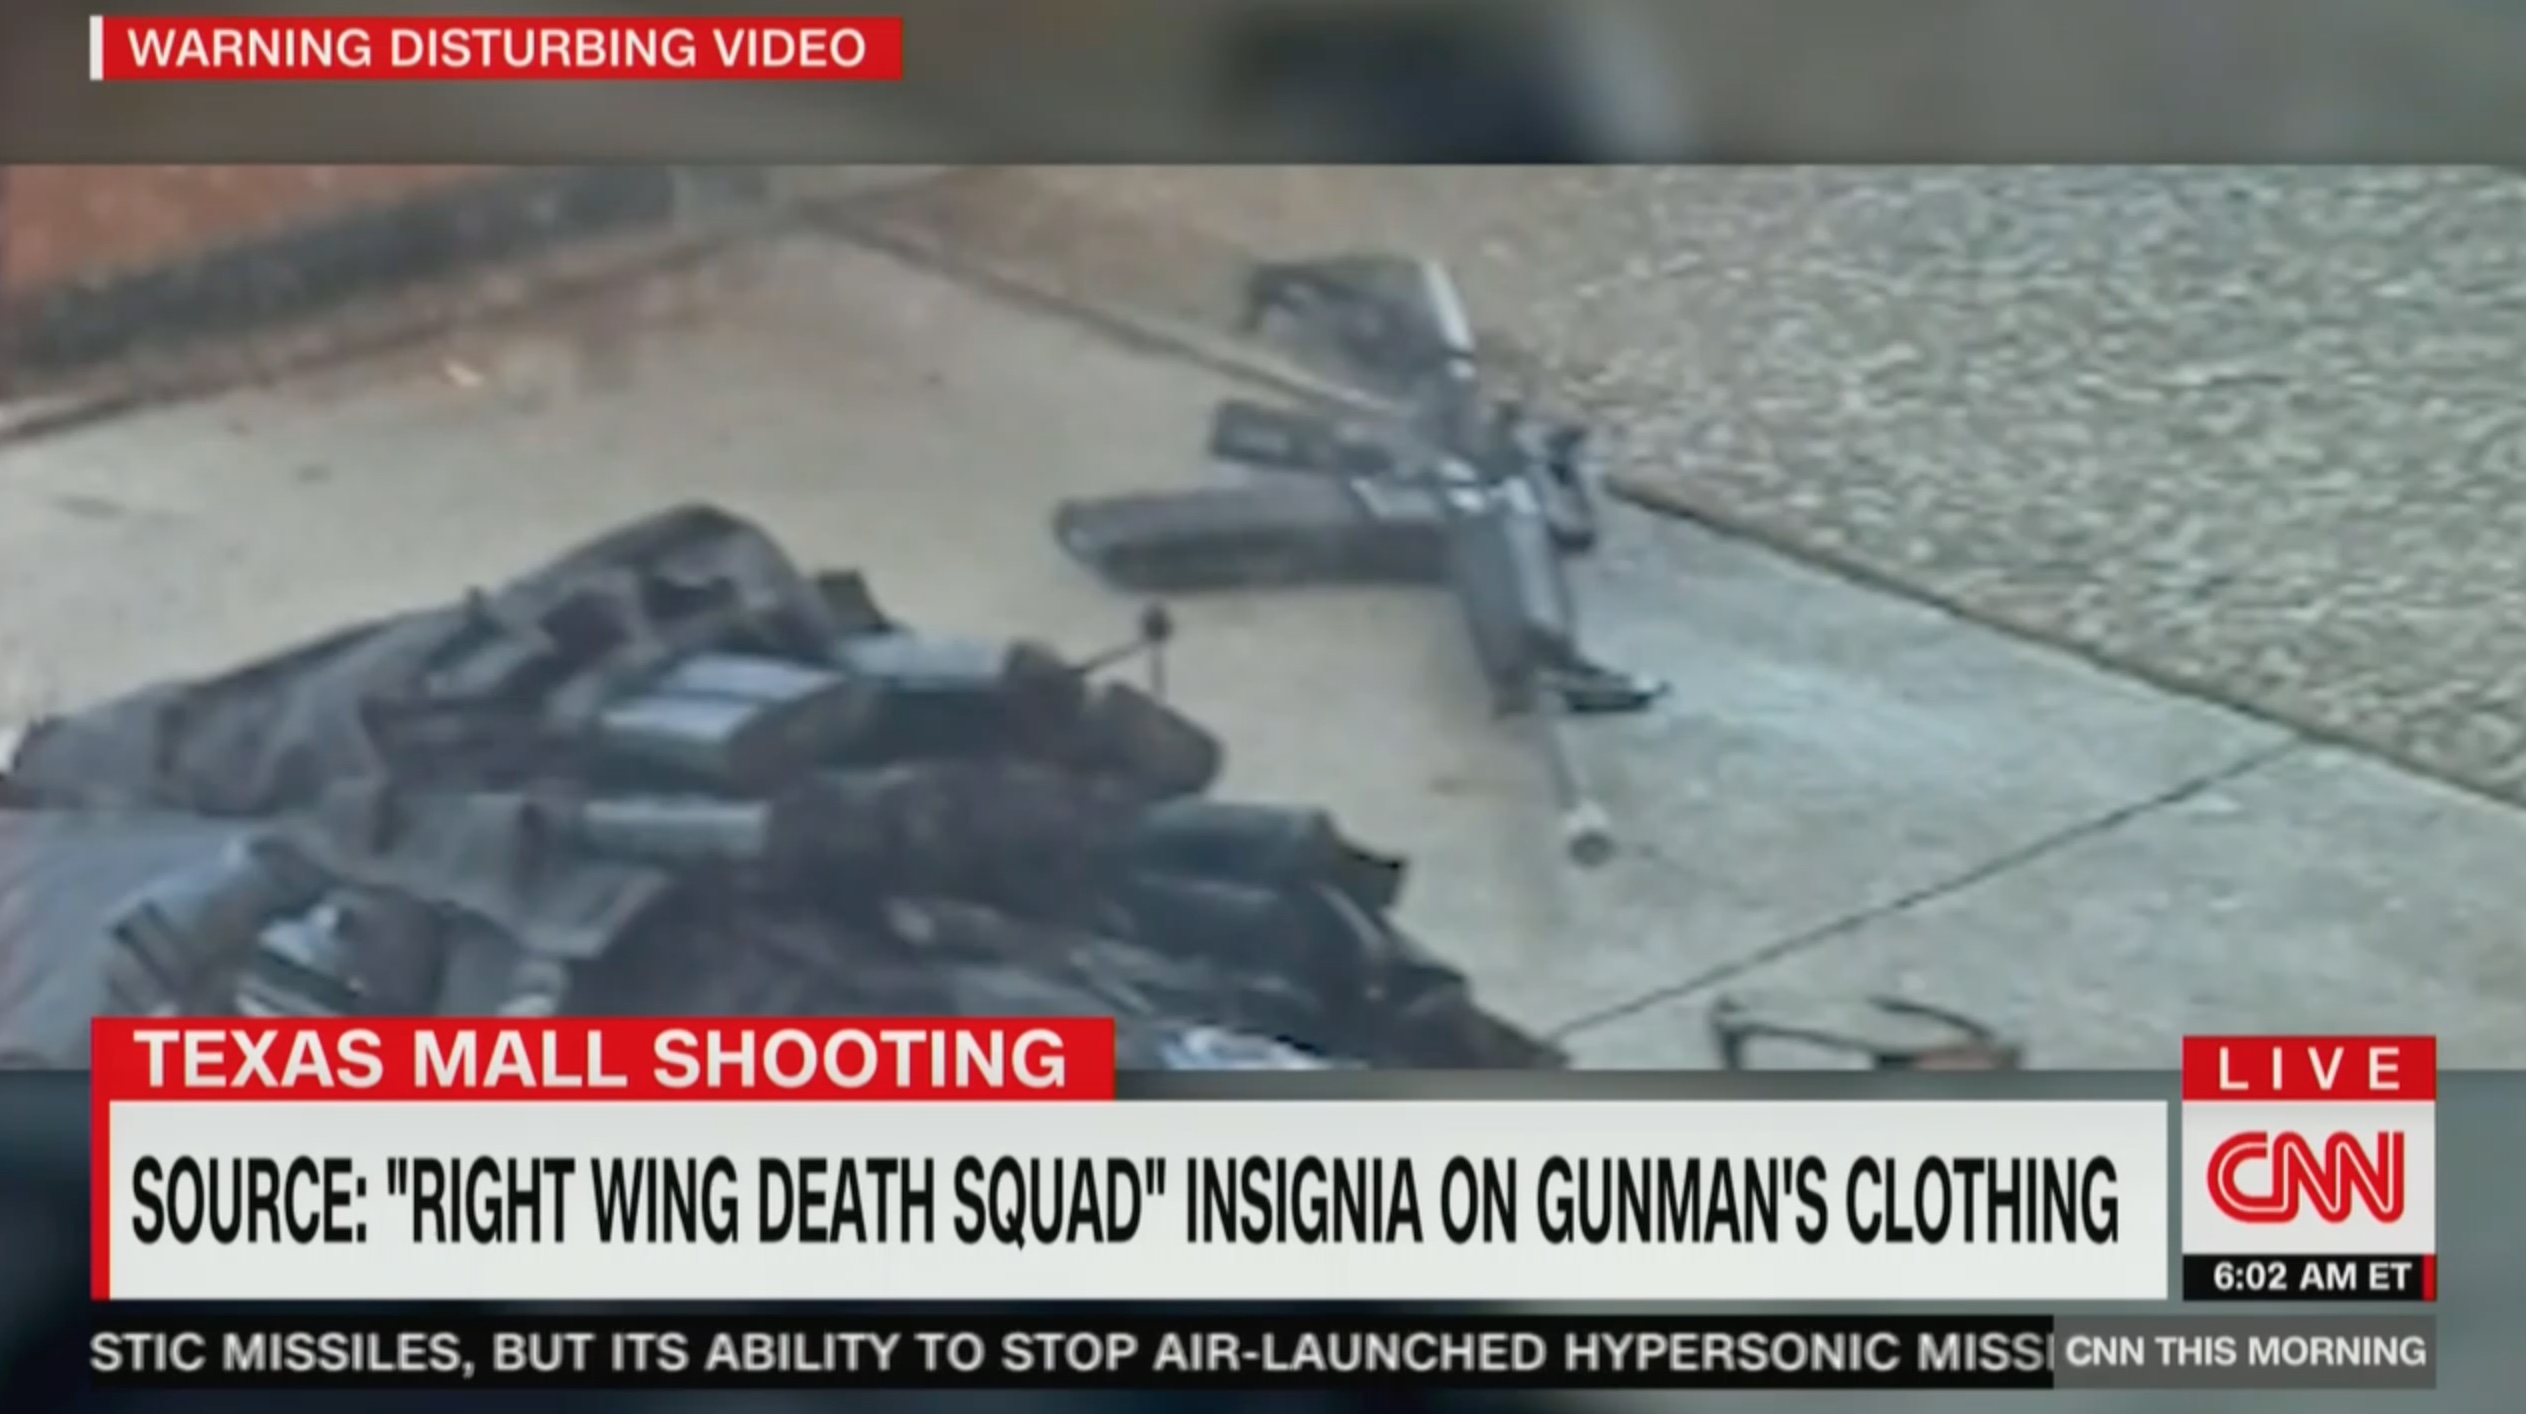 Texas gunman fantasized over race wars on social media before mass killing (washingtonpost.com)